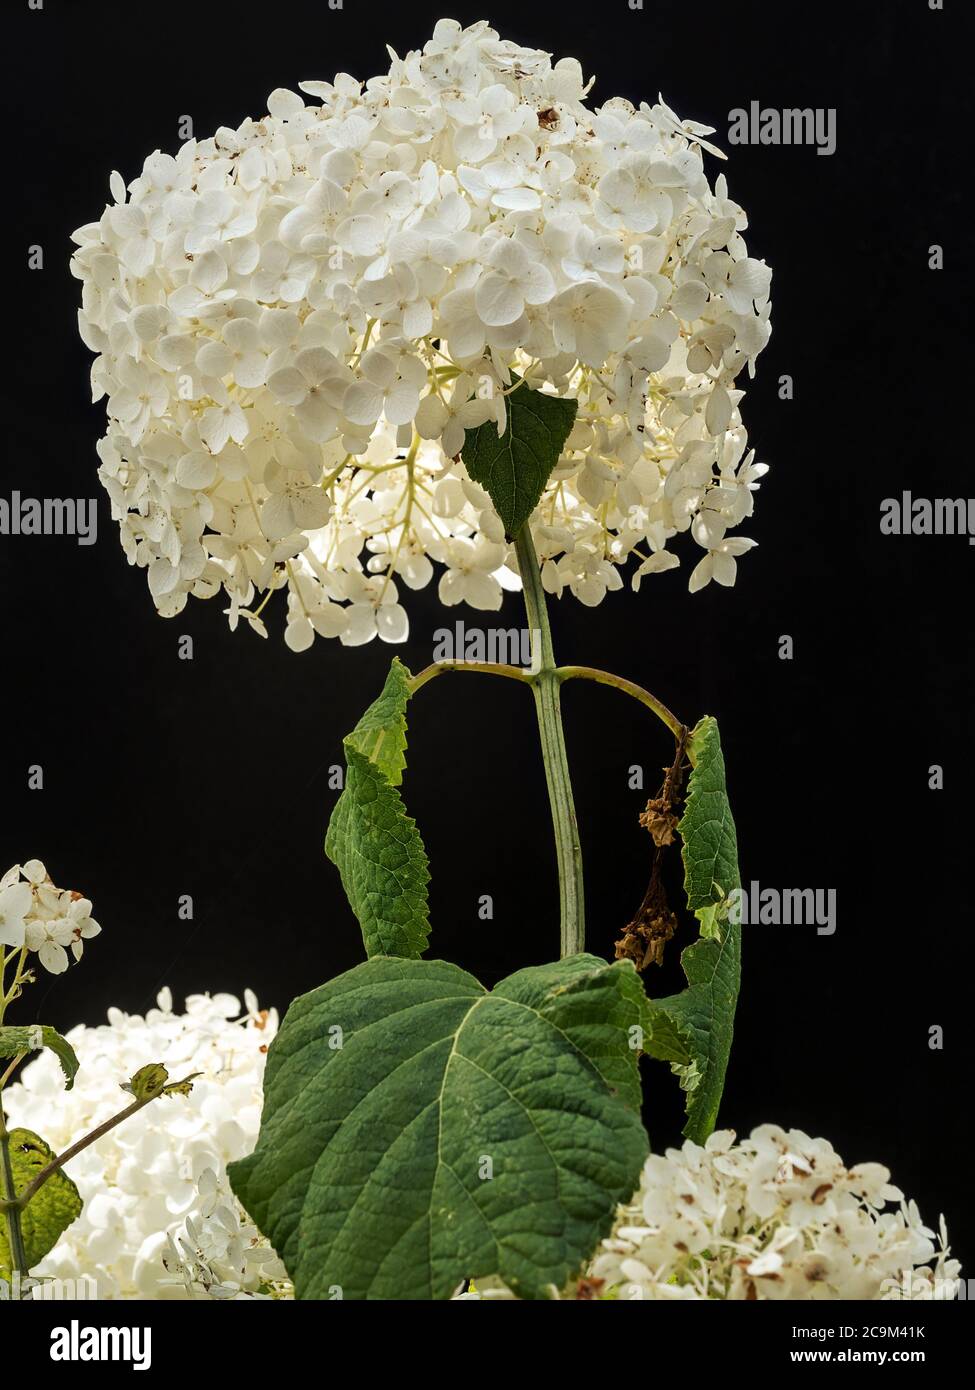 White Hydrangea Arborescens Annabelle flower on black background Stock Photo